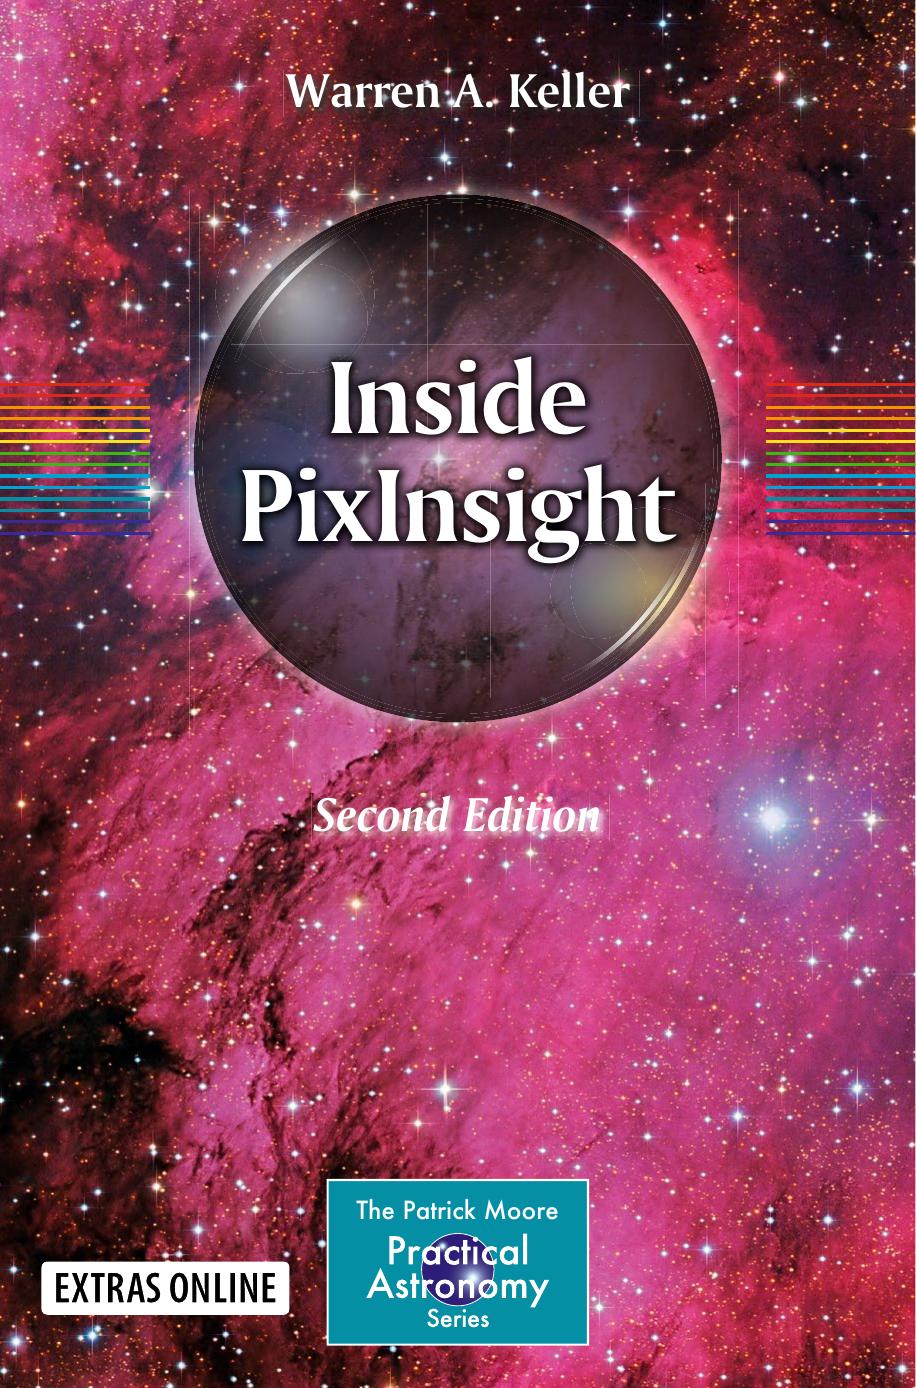 Inside PixInsight by Warren A. Keller